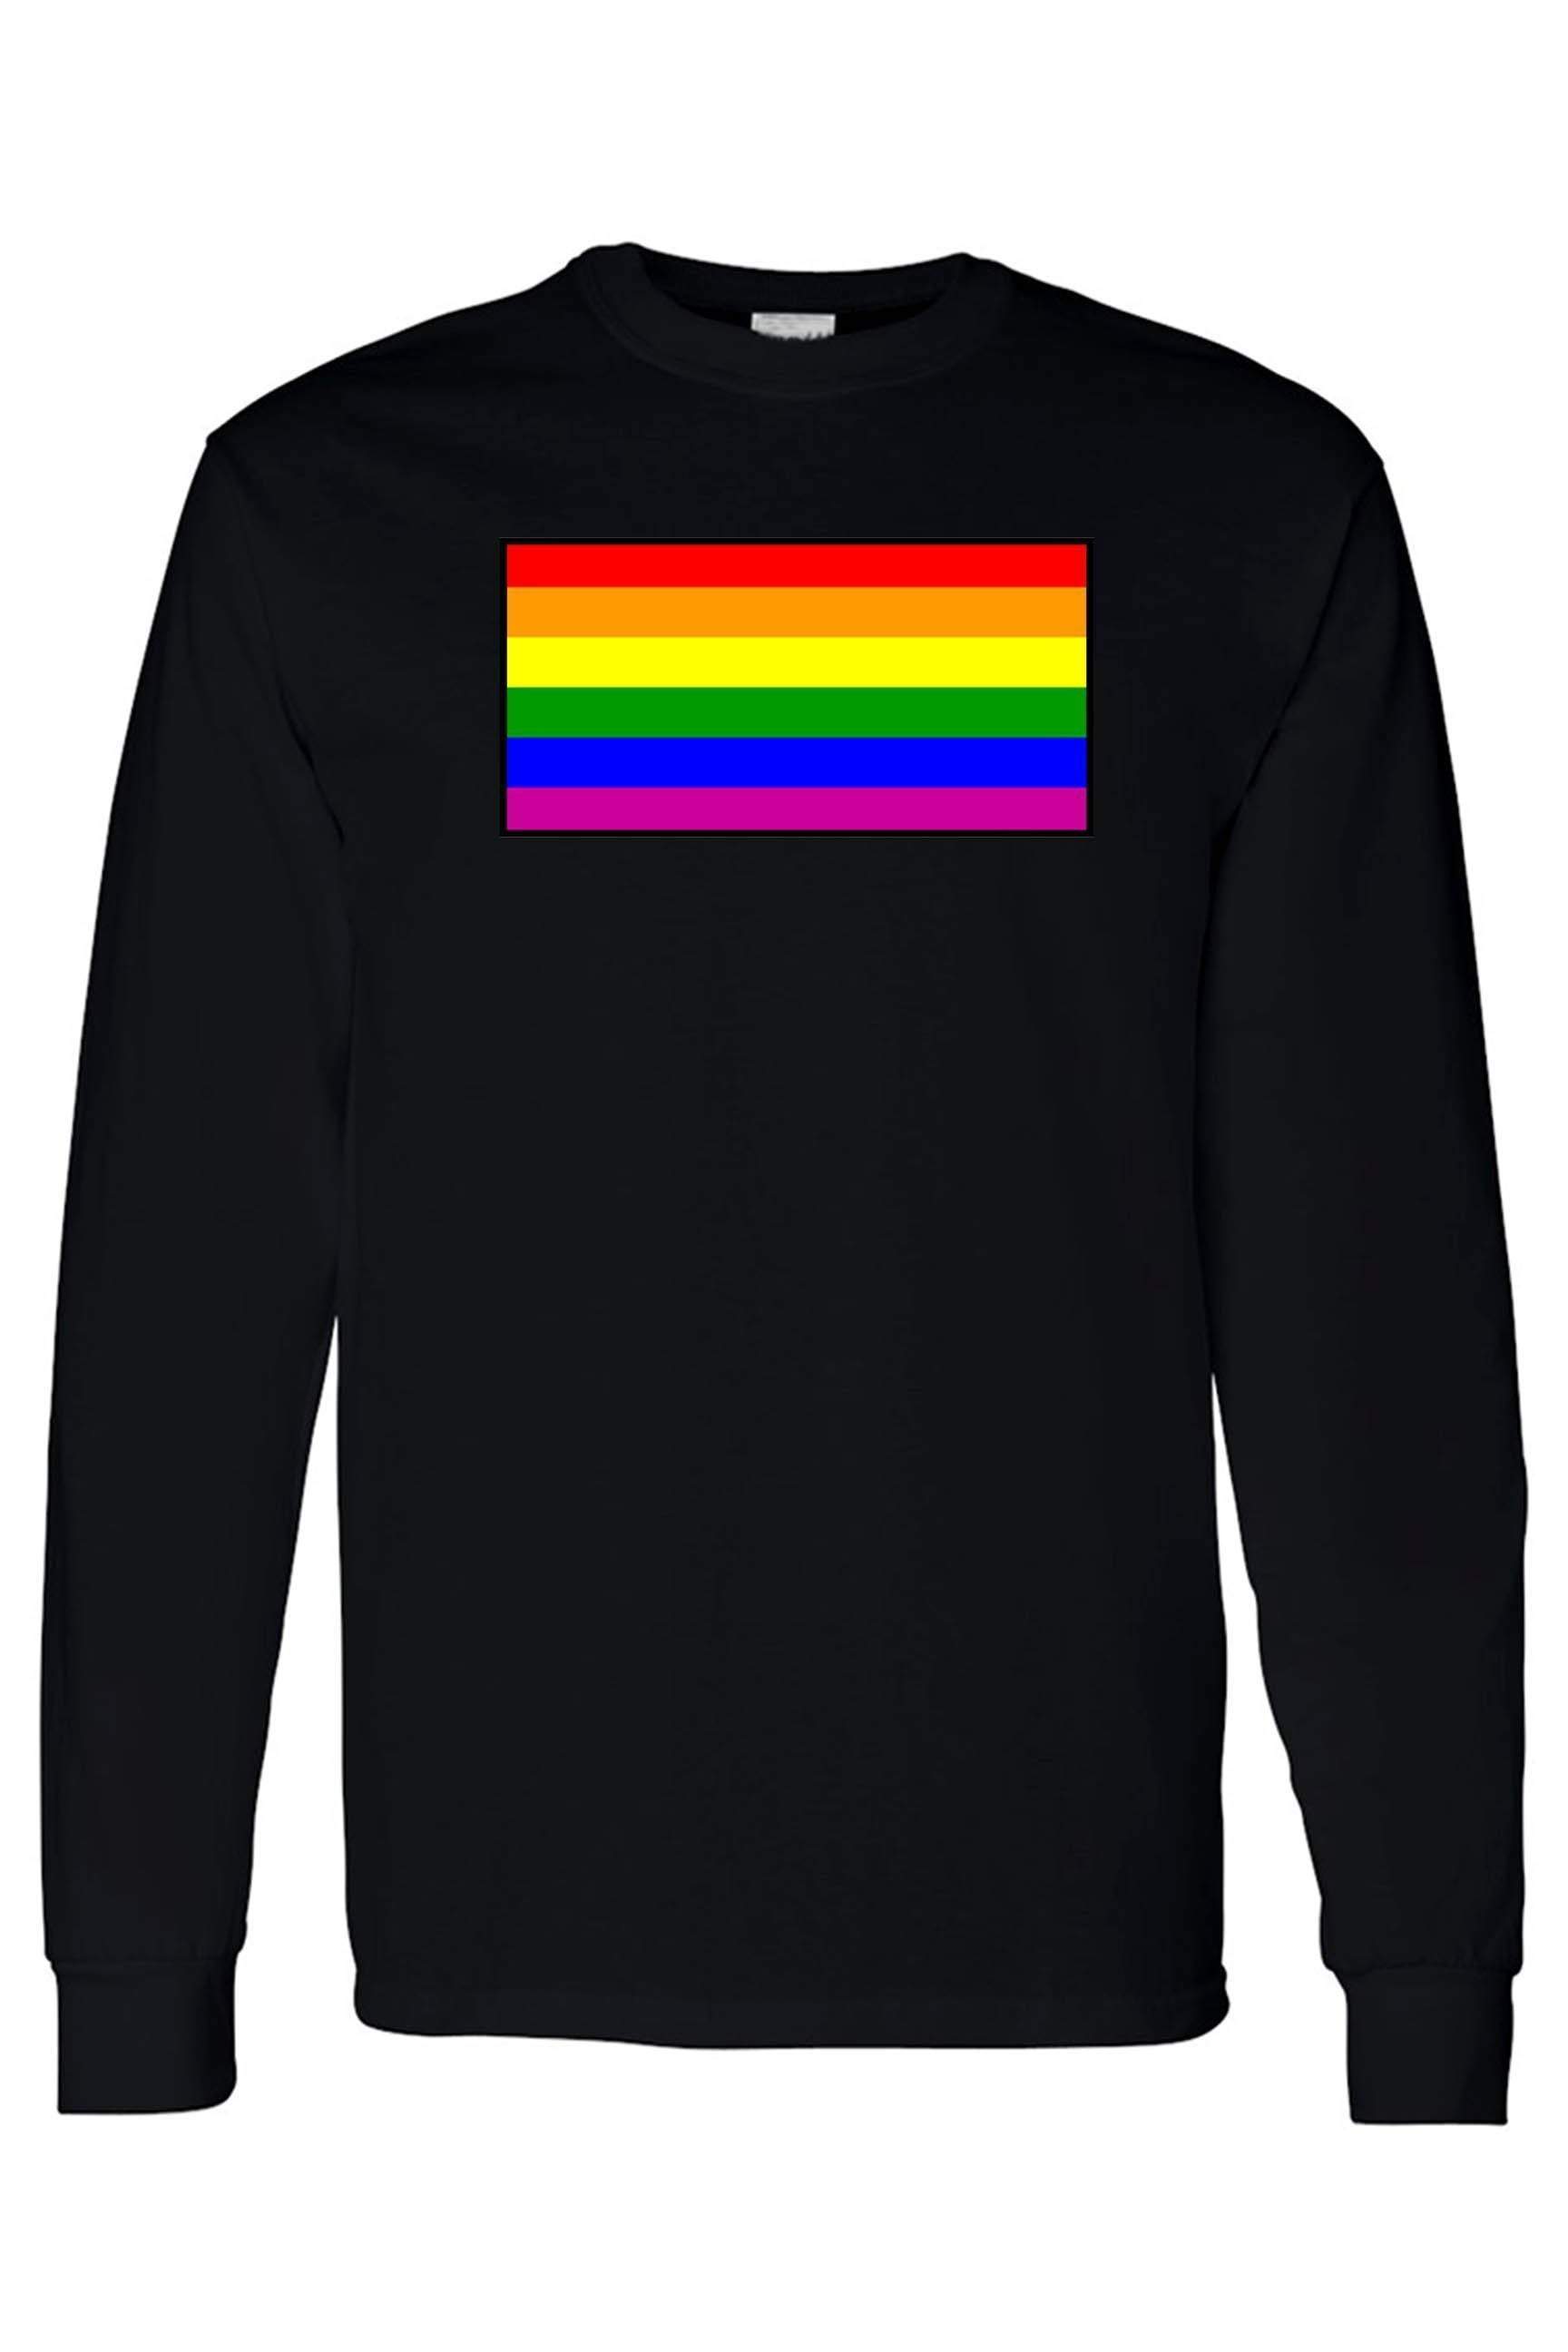 Unisex Long Sleeve Shirt Gay Pride Rainbow Flag